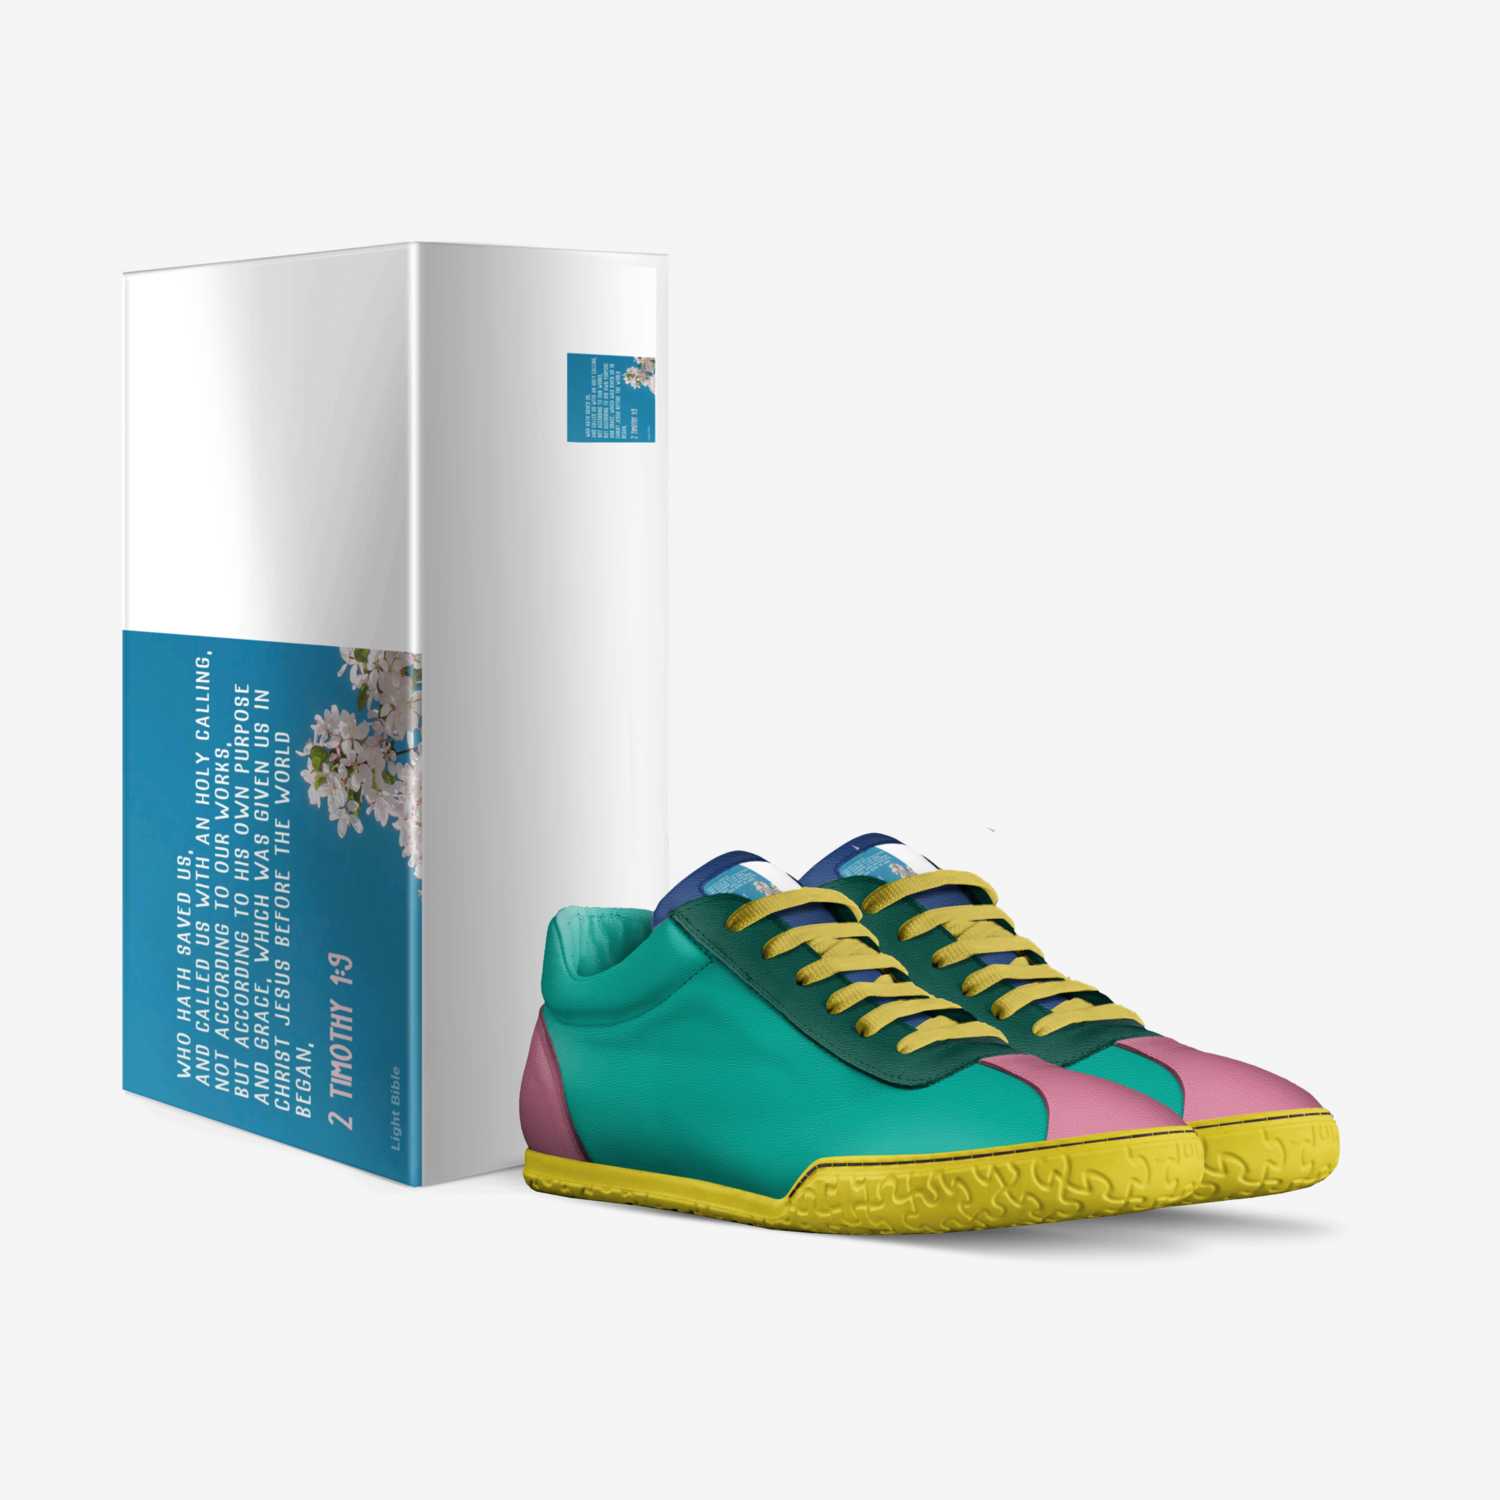 Jesusoflove custom made in Italy shoes by Alicia Lofton | Box view